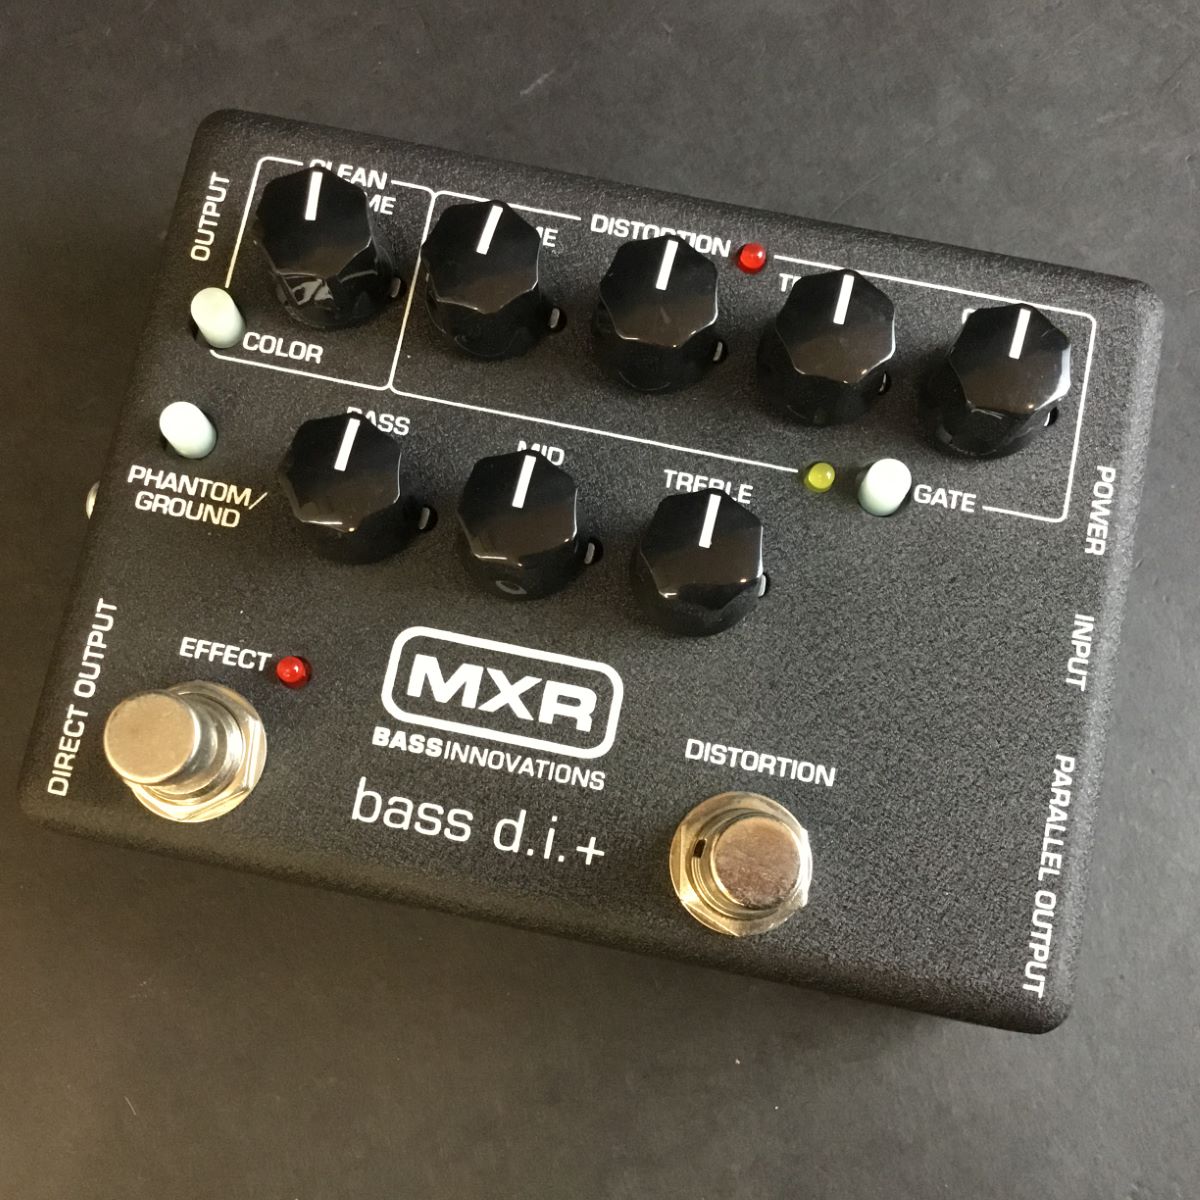 MXR M80 Bass D.I.+(プリアンプ) | www.nov-ita.fr